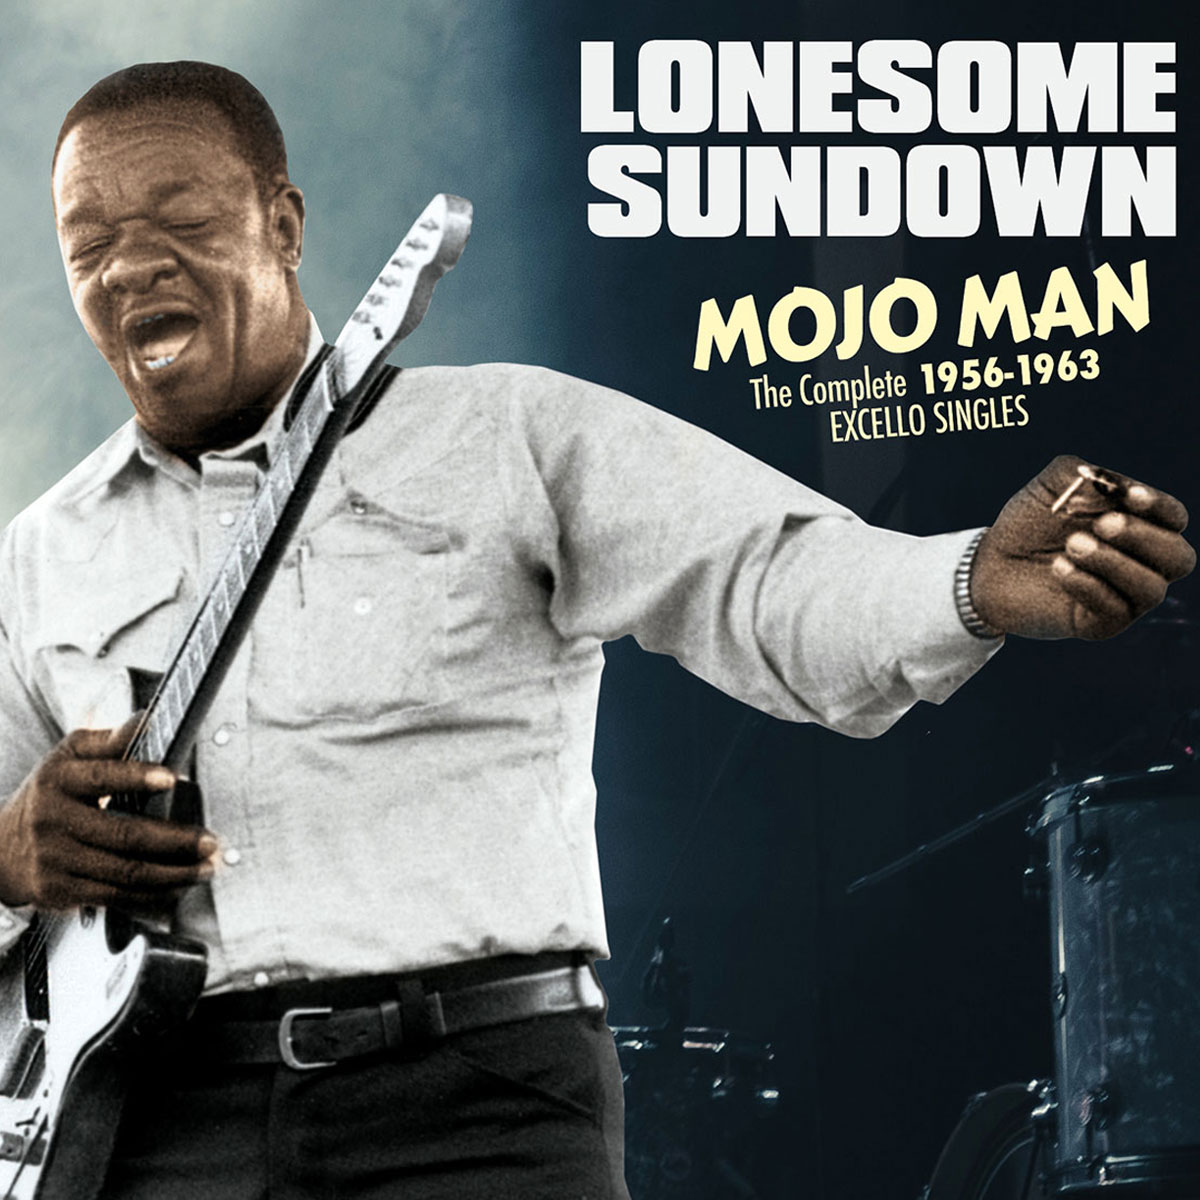 Mojo Man - The Complete 1956 - 63 Excello Singles